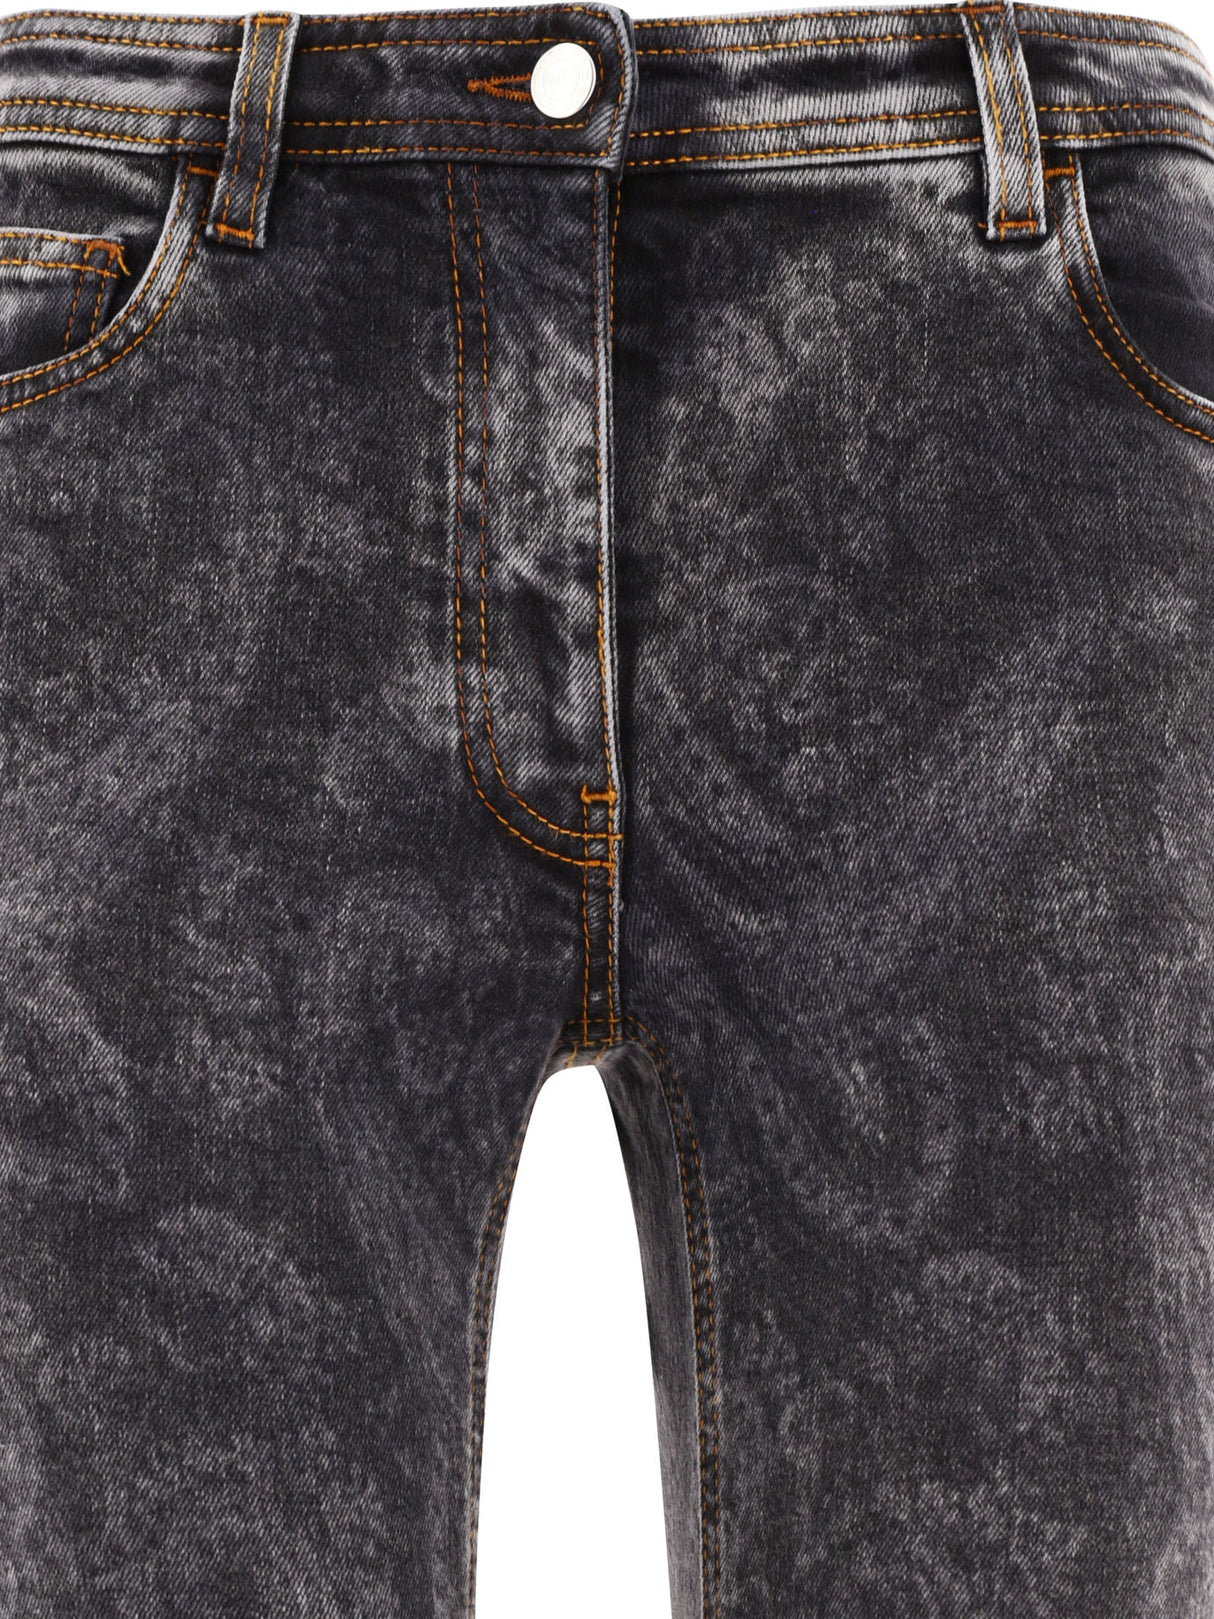 ETRO Grey Skinny Paisley Jeans for Women - FW23